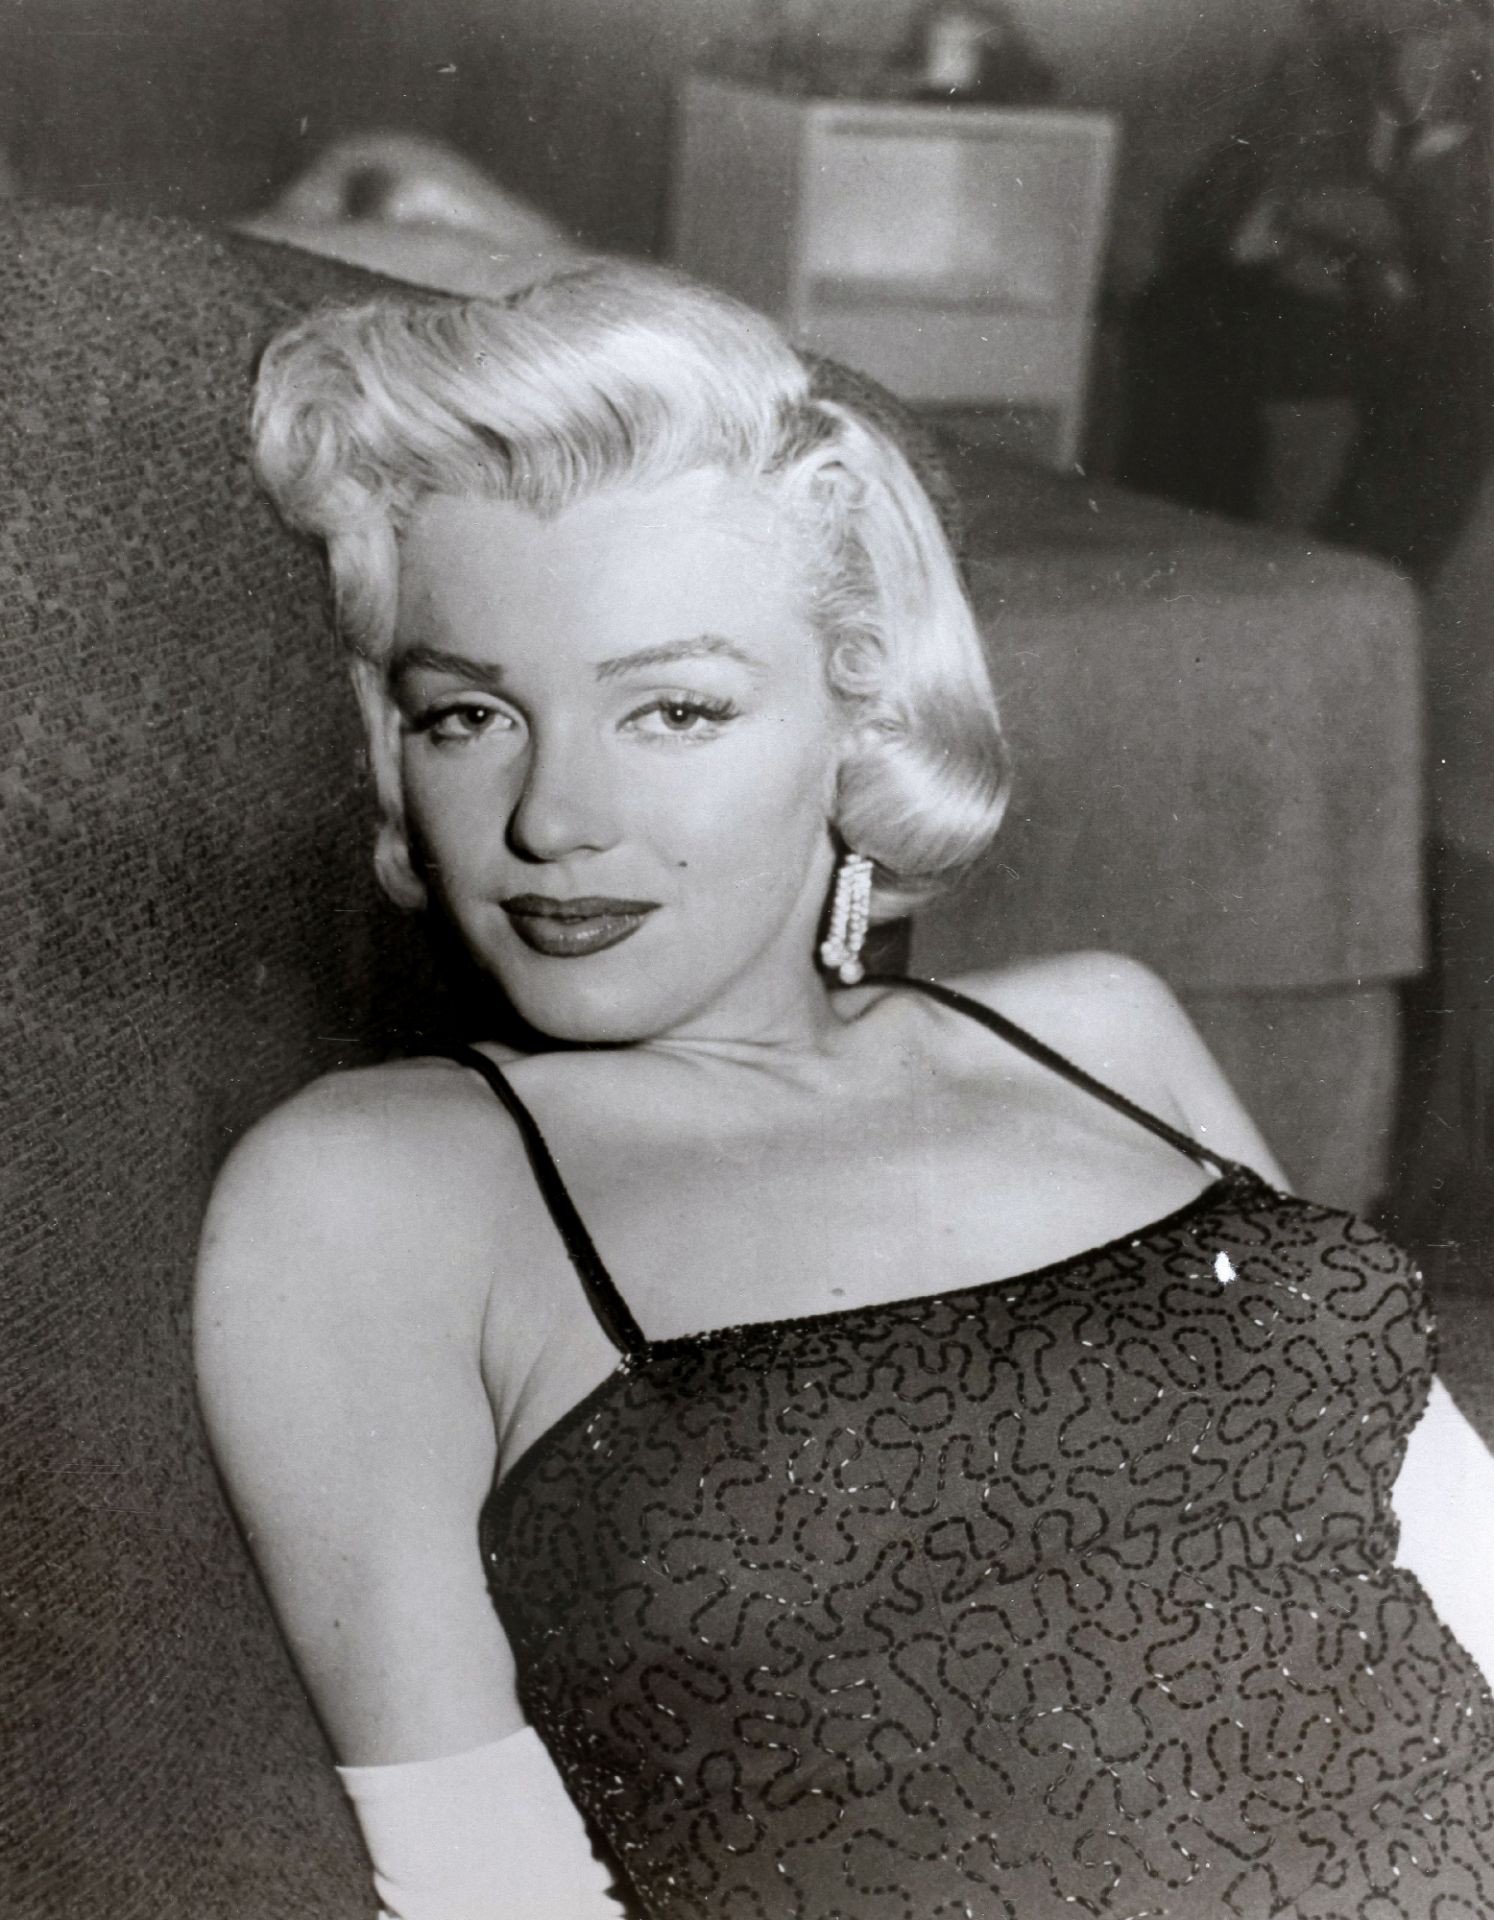 FOTOGRAFIE | 7 Pressefotos von Marilyn Monroe und 1 Notenblatt "Some Like It Hot" - Image 5 of 9